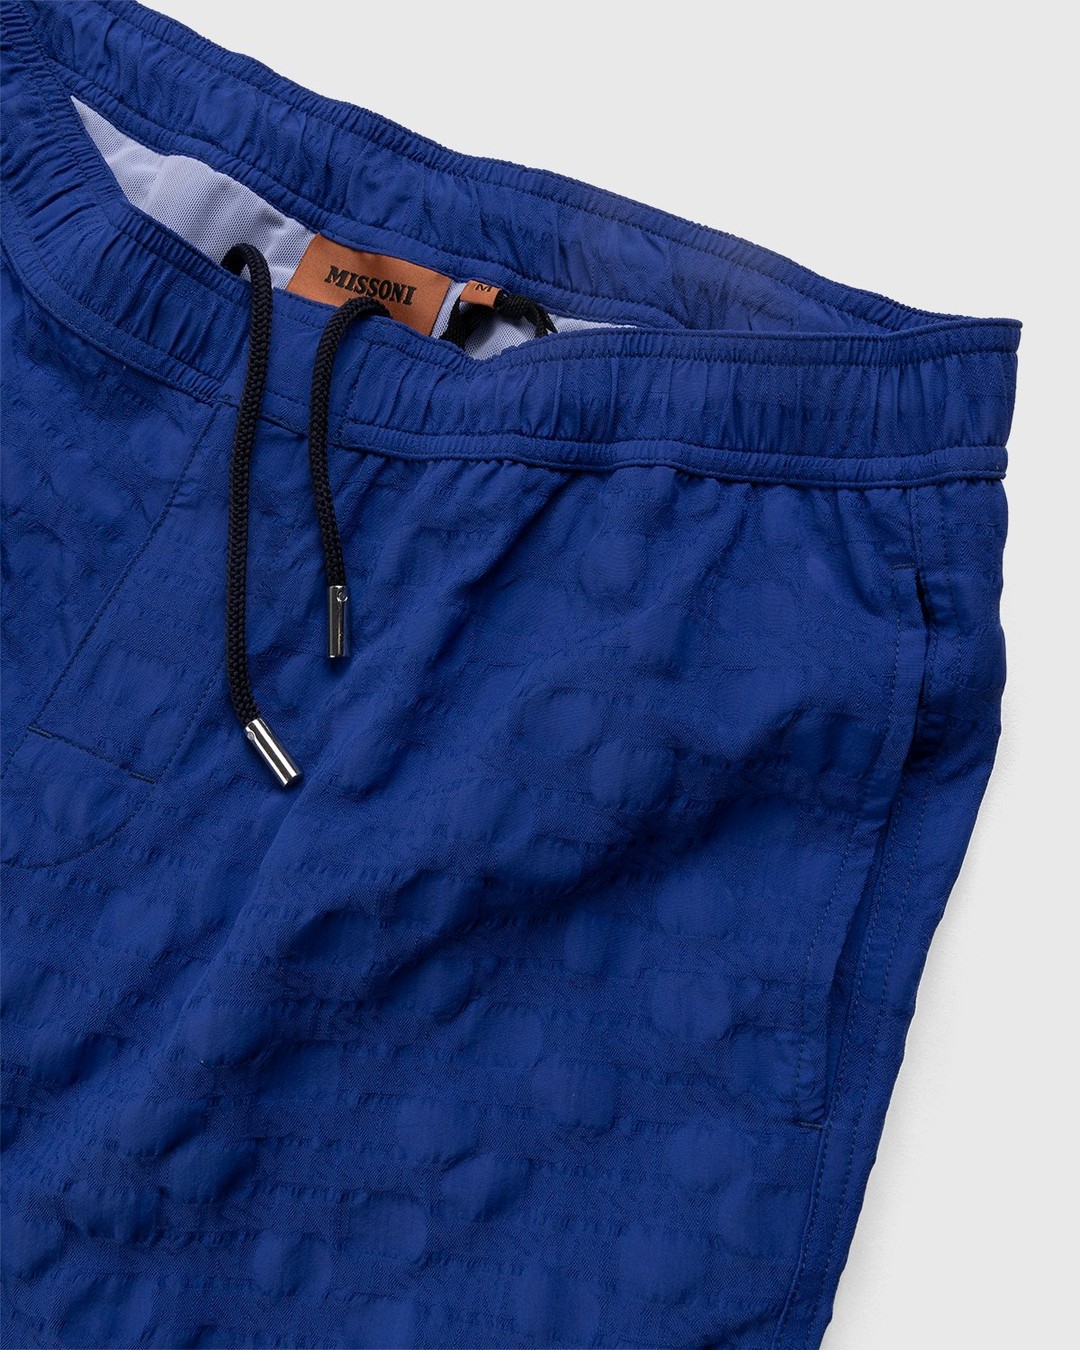 Missoni – Logo Swim Trunks Blue - Shorts - Blue - Image 5